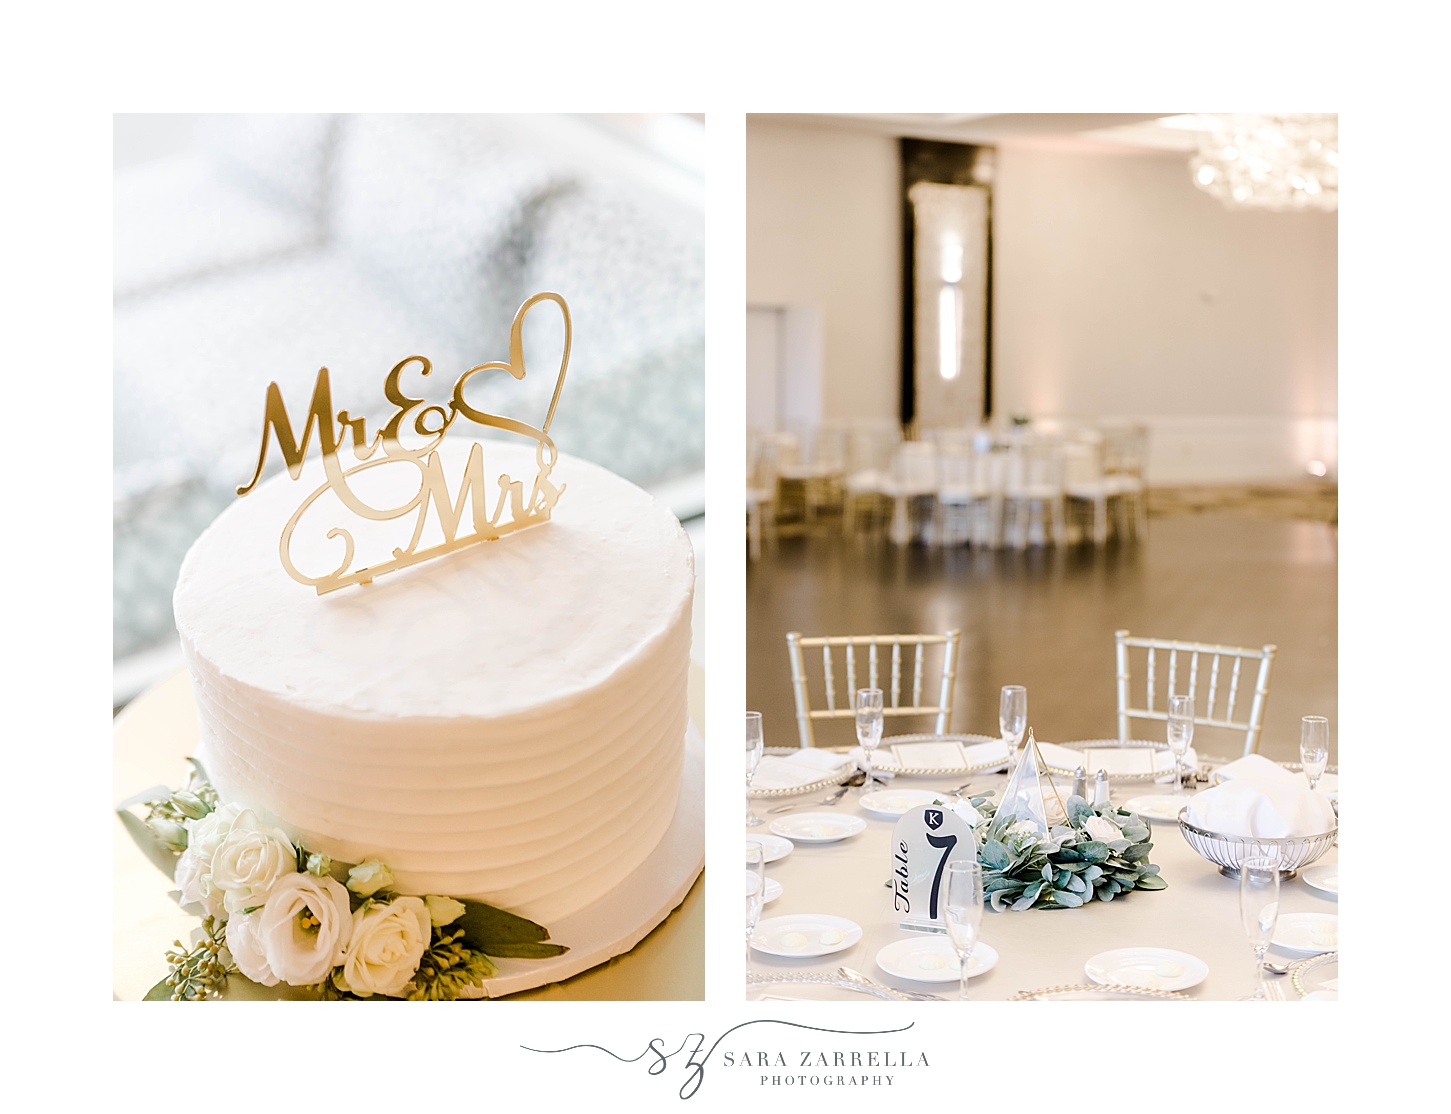 wedding cake with custom Mr & Mrs topper